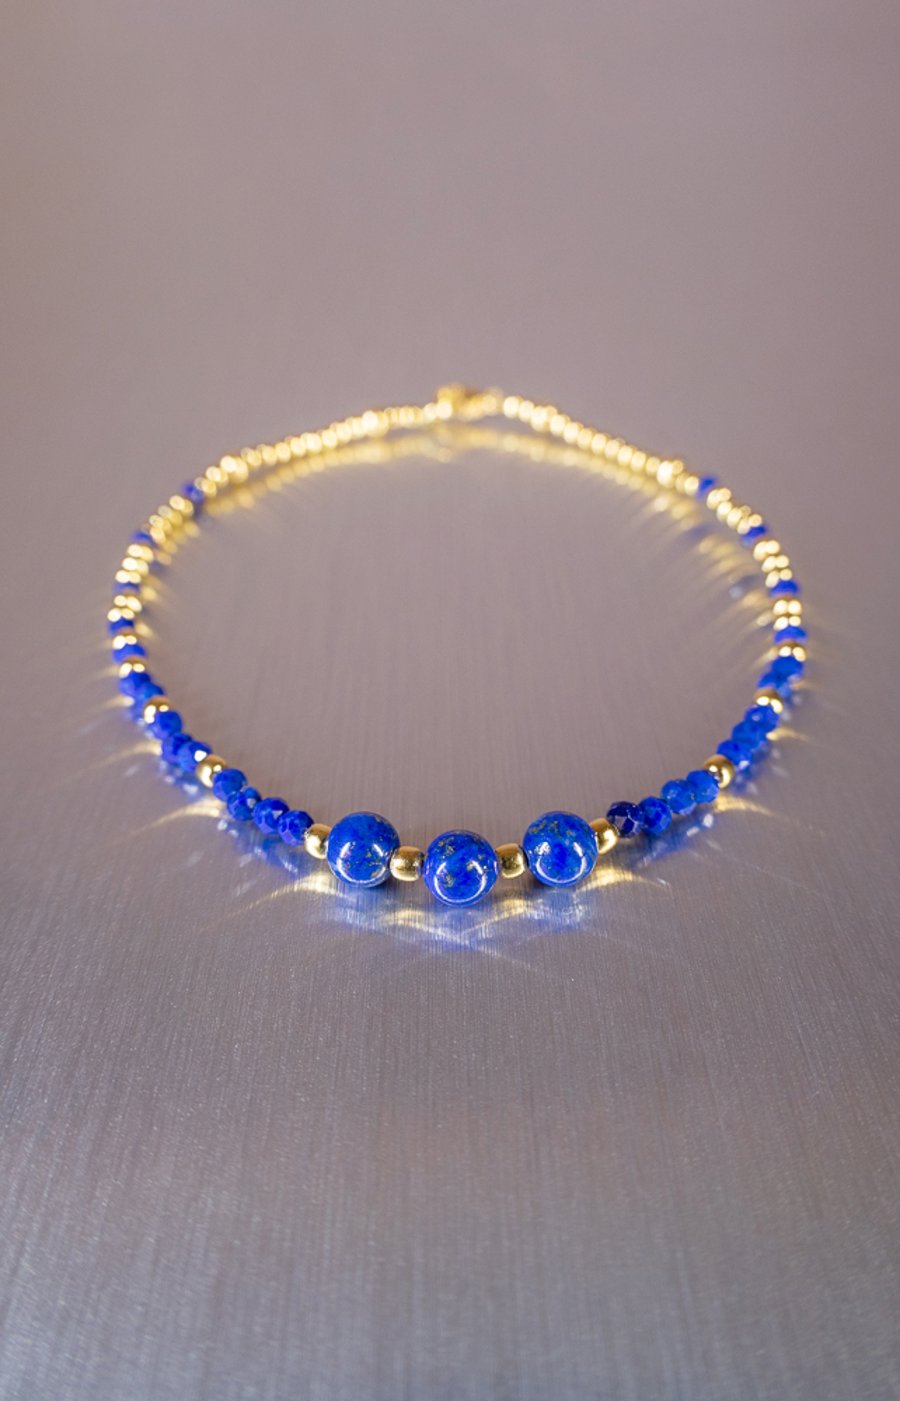 Bracelet handmade with stunning Lapis Lazuli gemstone beads 